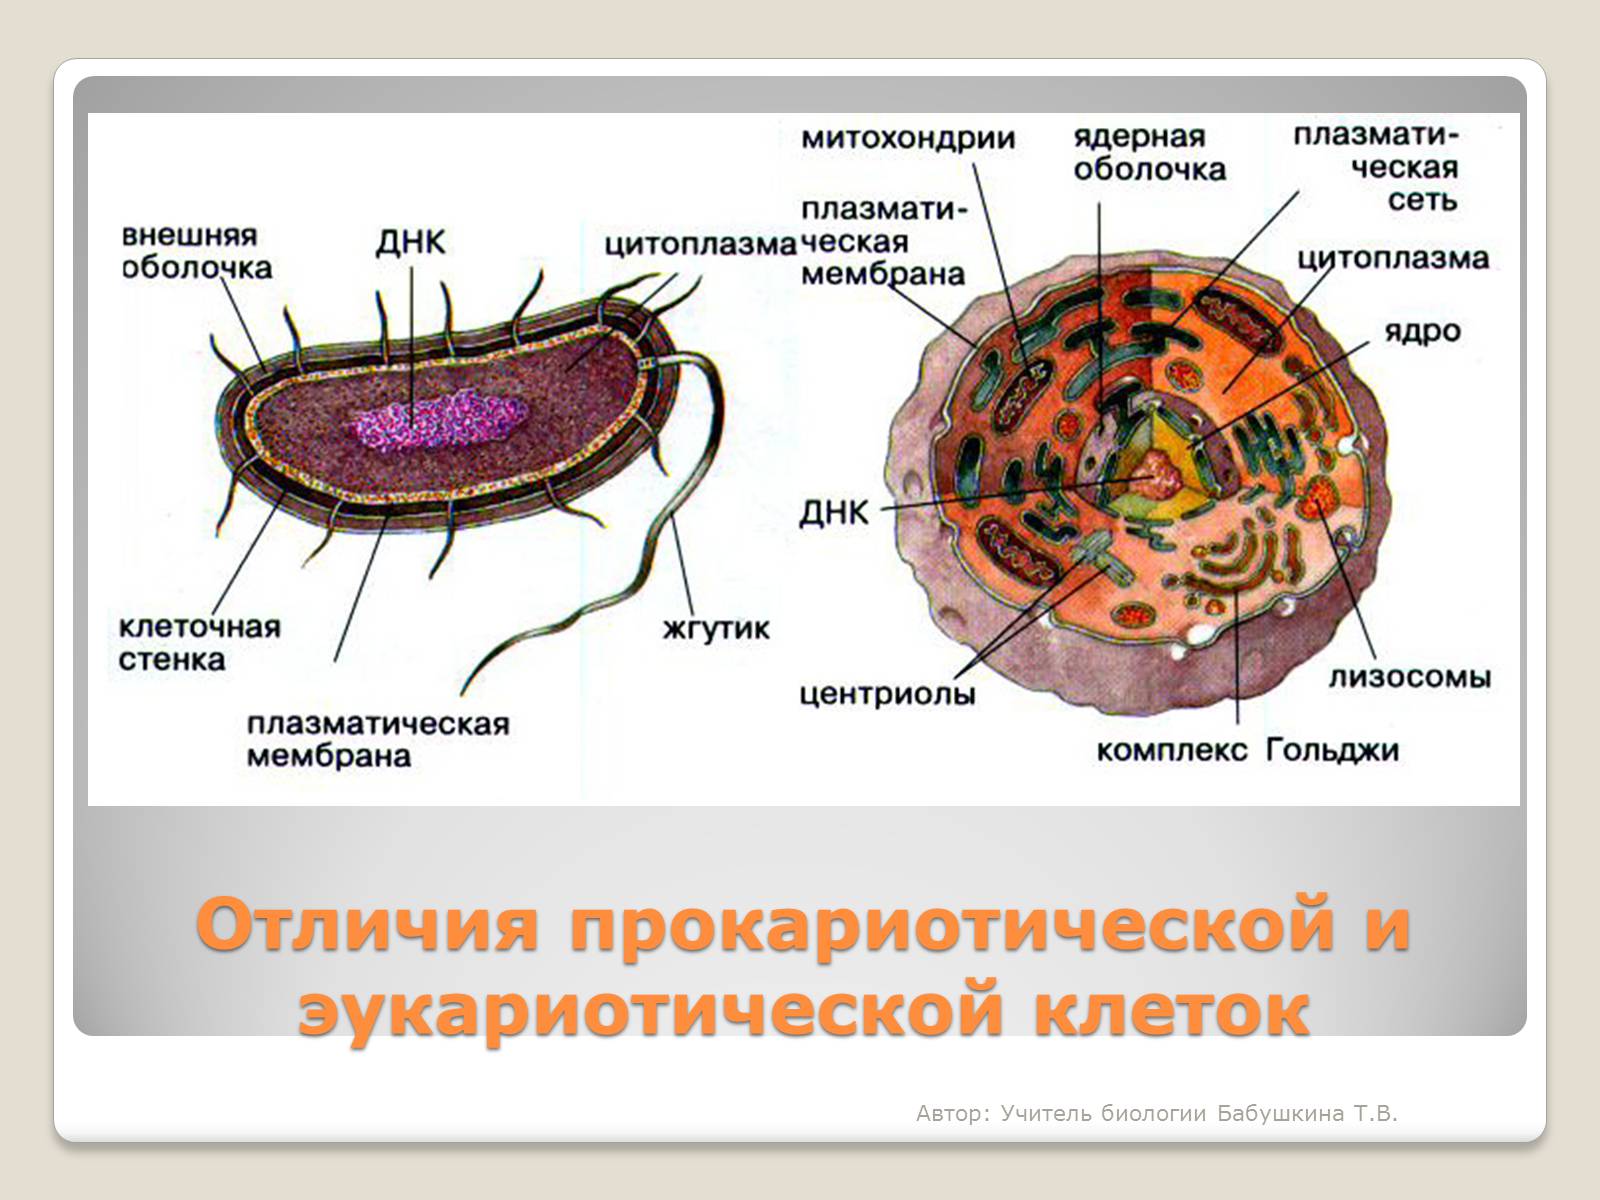 Структура клетки прокариот. Строение бактерии прокариот. Строение бактериальной клетки прокариот. Прокариотическая клетка bacteria. Строение клетки прокариот бактерии.